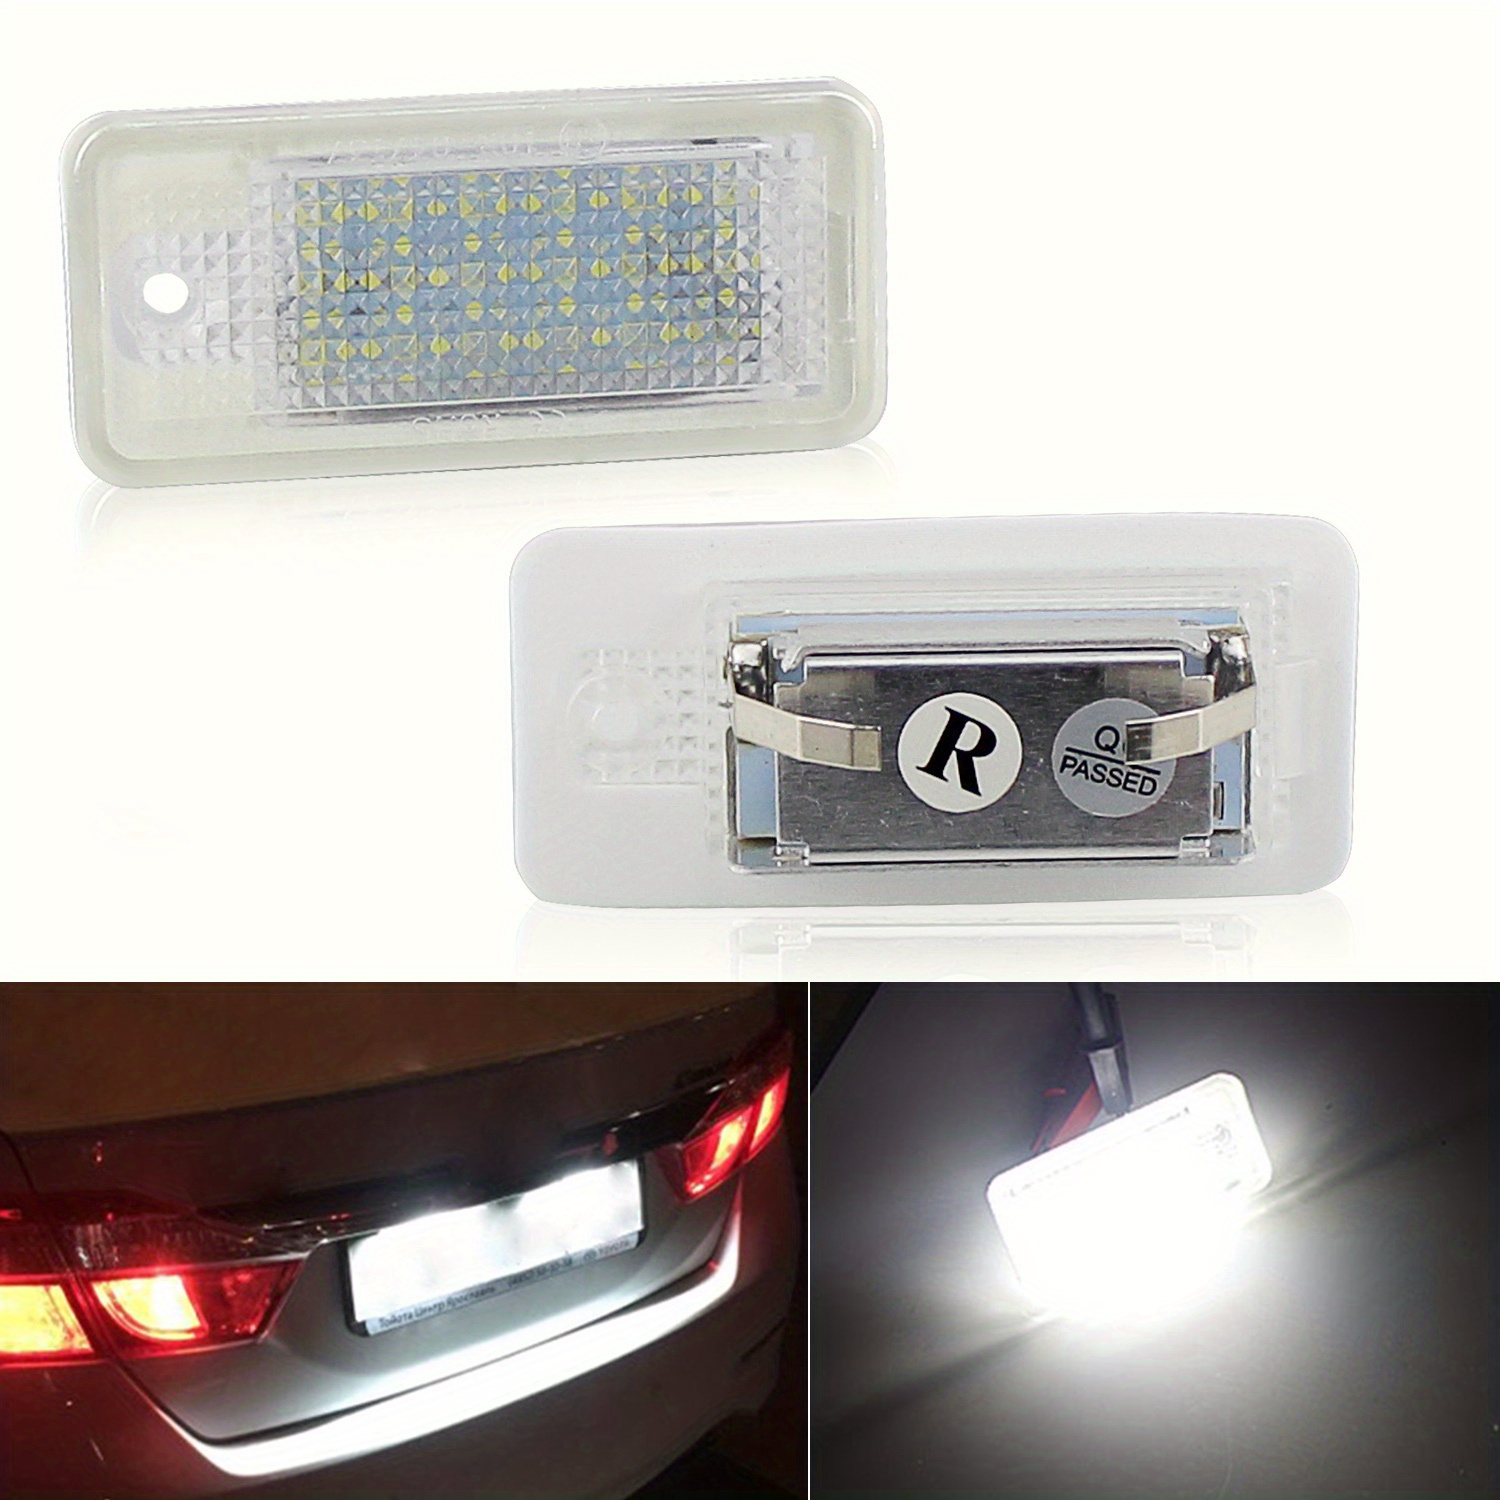 Upgrade LED Kennzeichenbeleuchtung für Audi A4 B6 / B7 / A6 C6 (4F